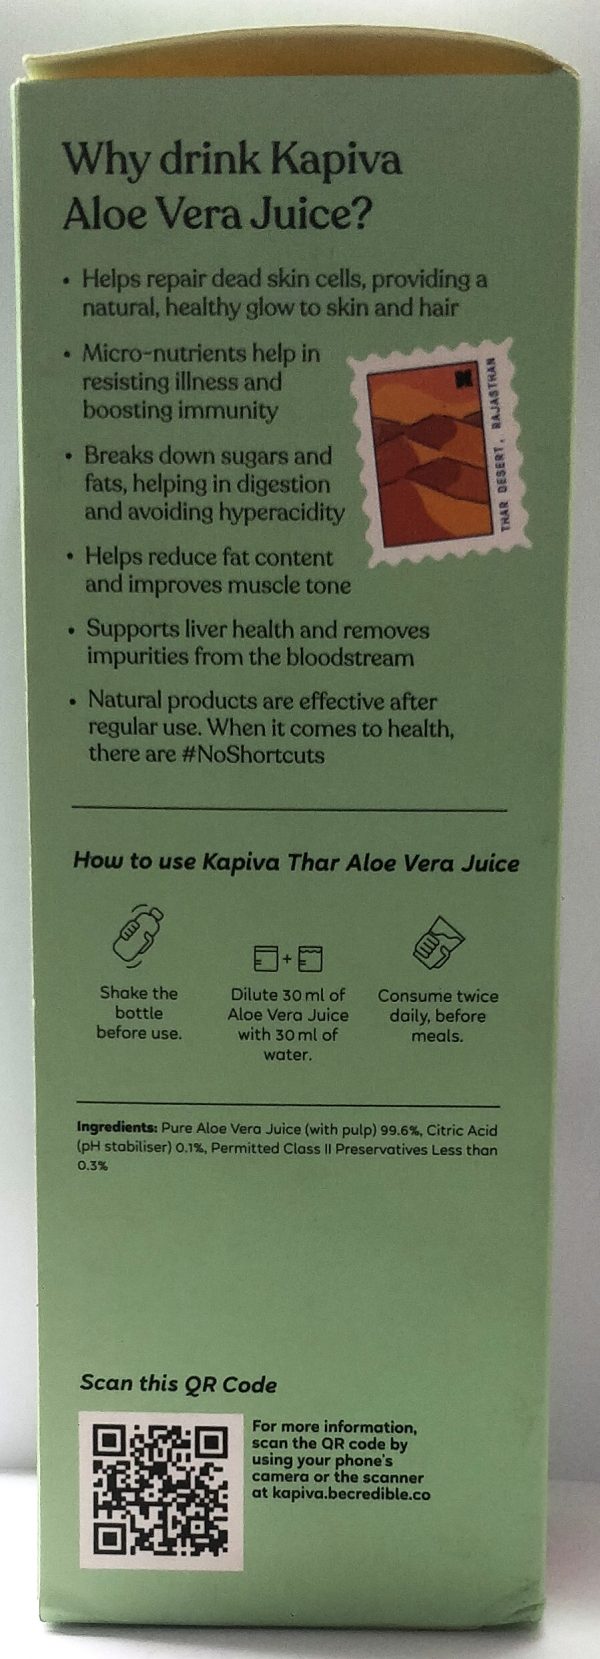 Kapiva Thar Aloe Vera Juice contains